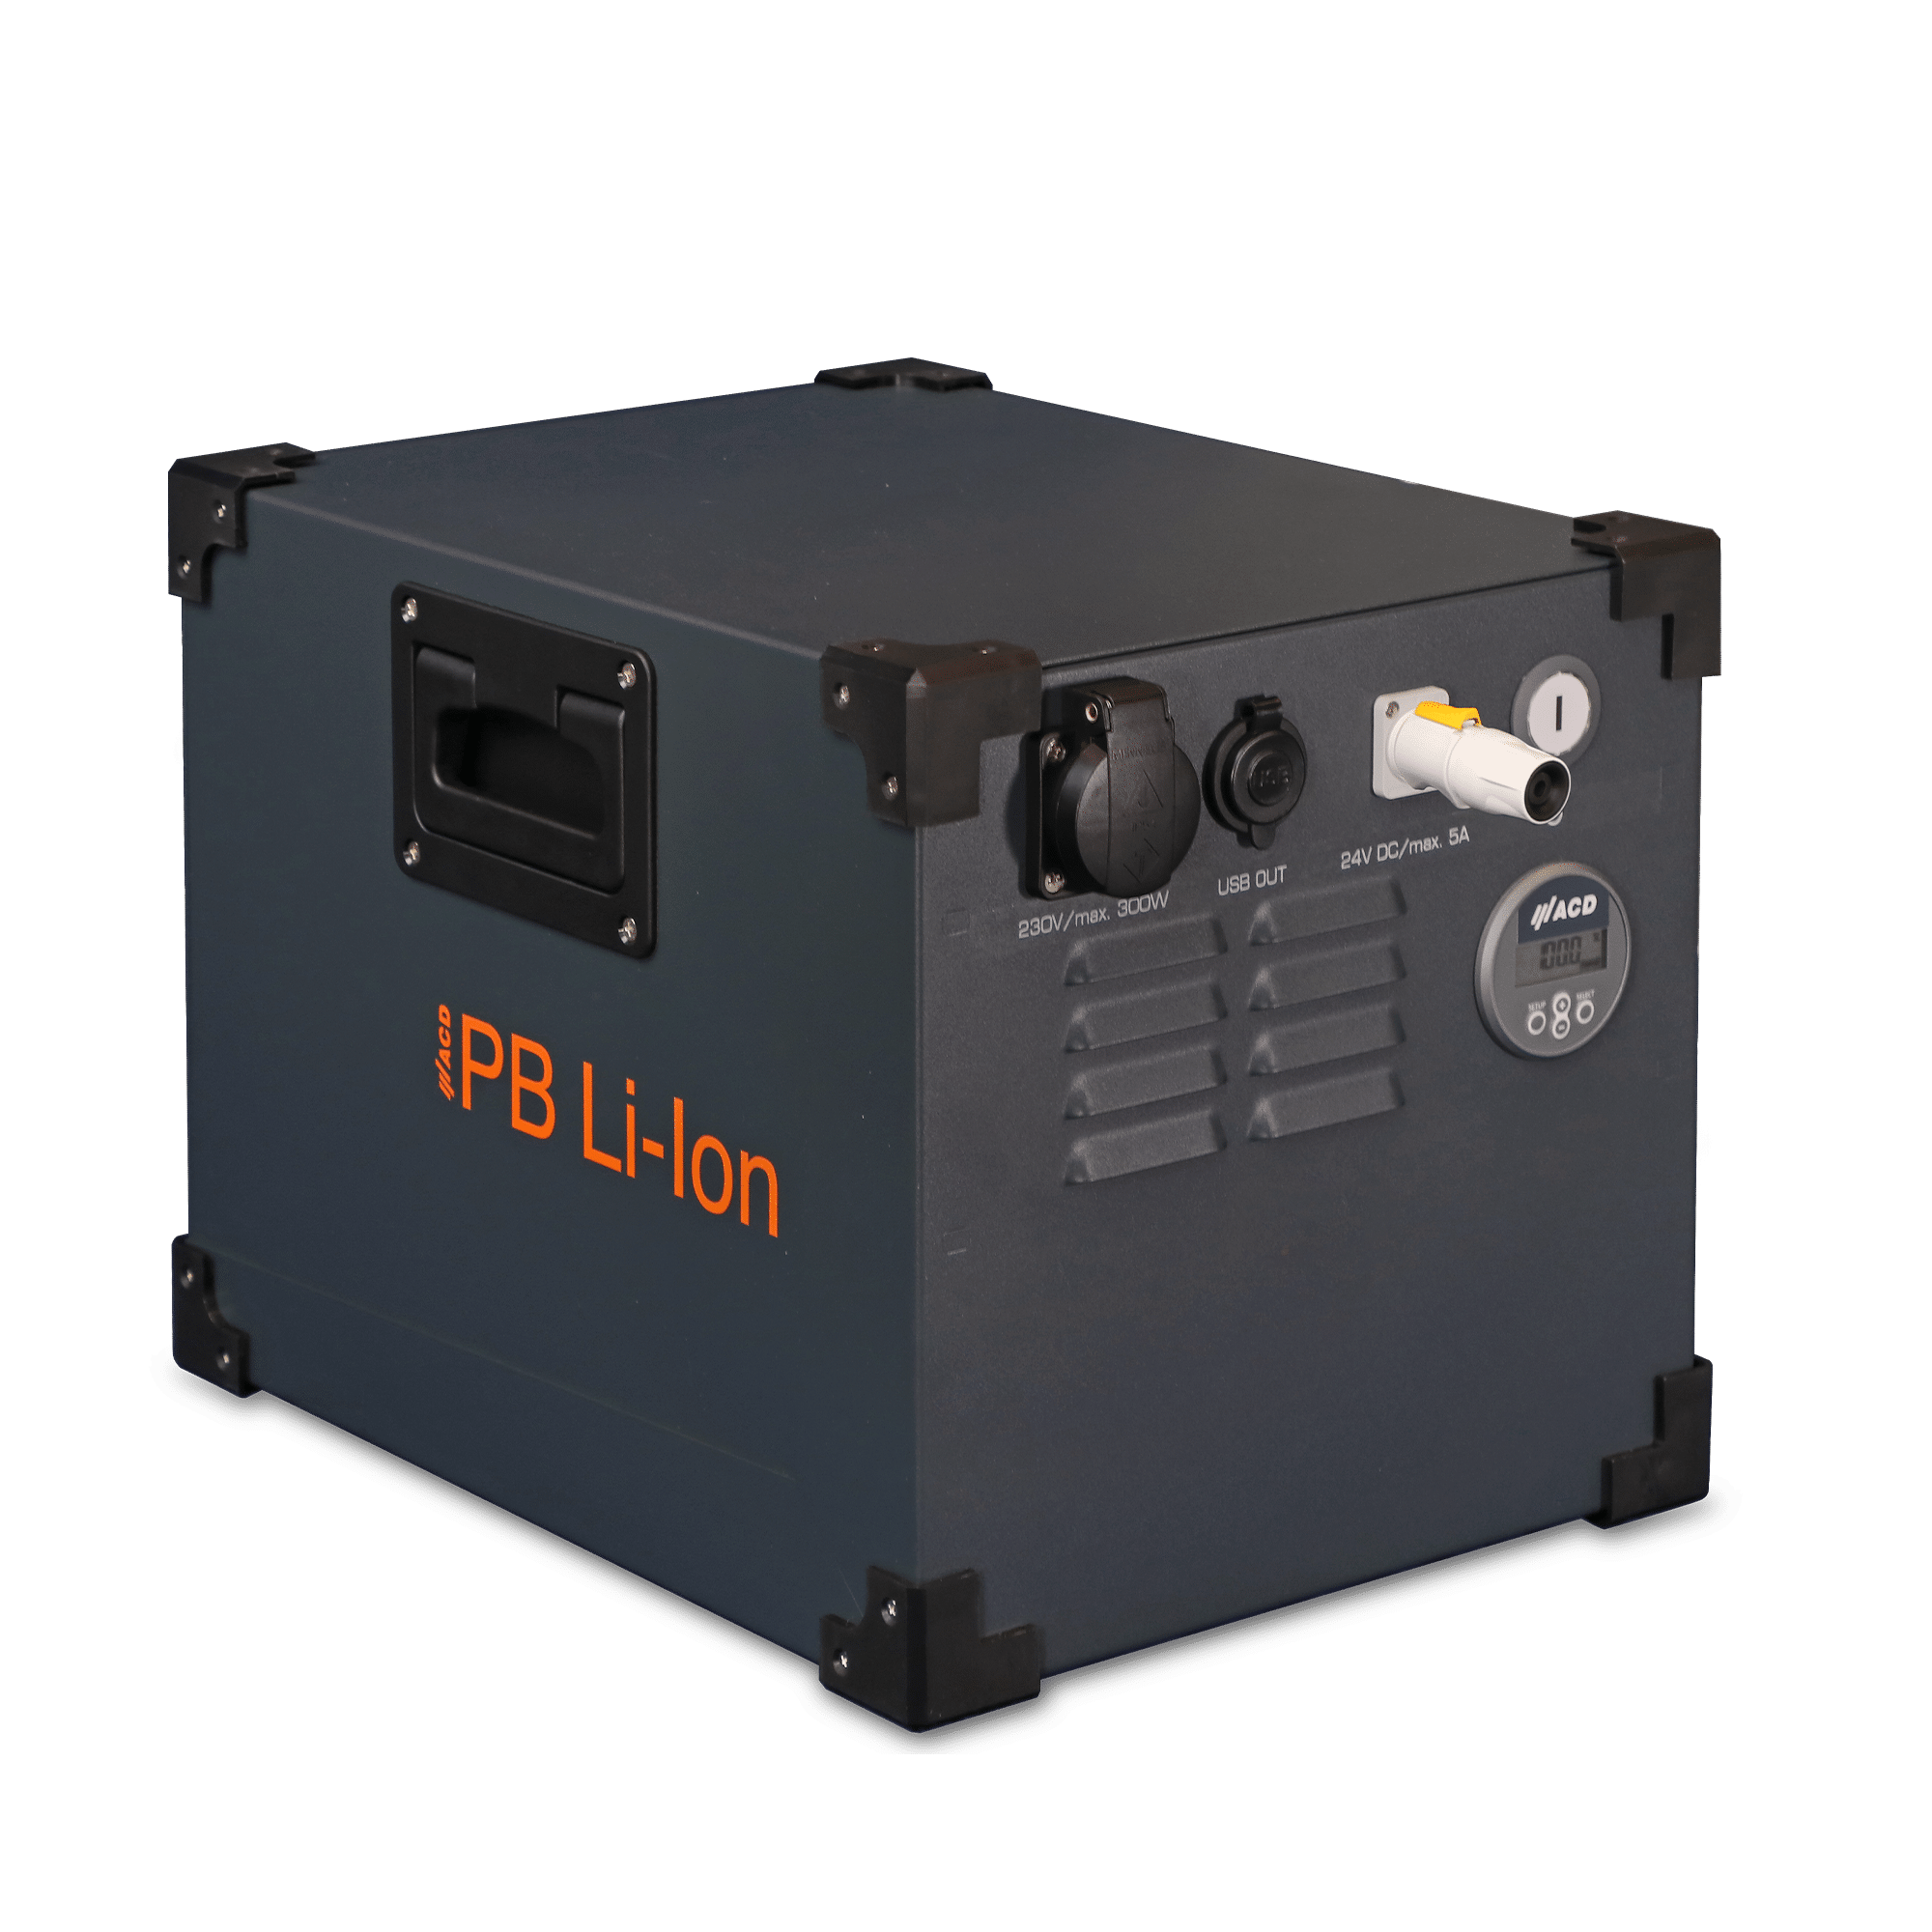 PowerBox PB300 Li-Ionen